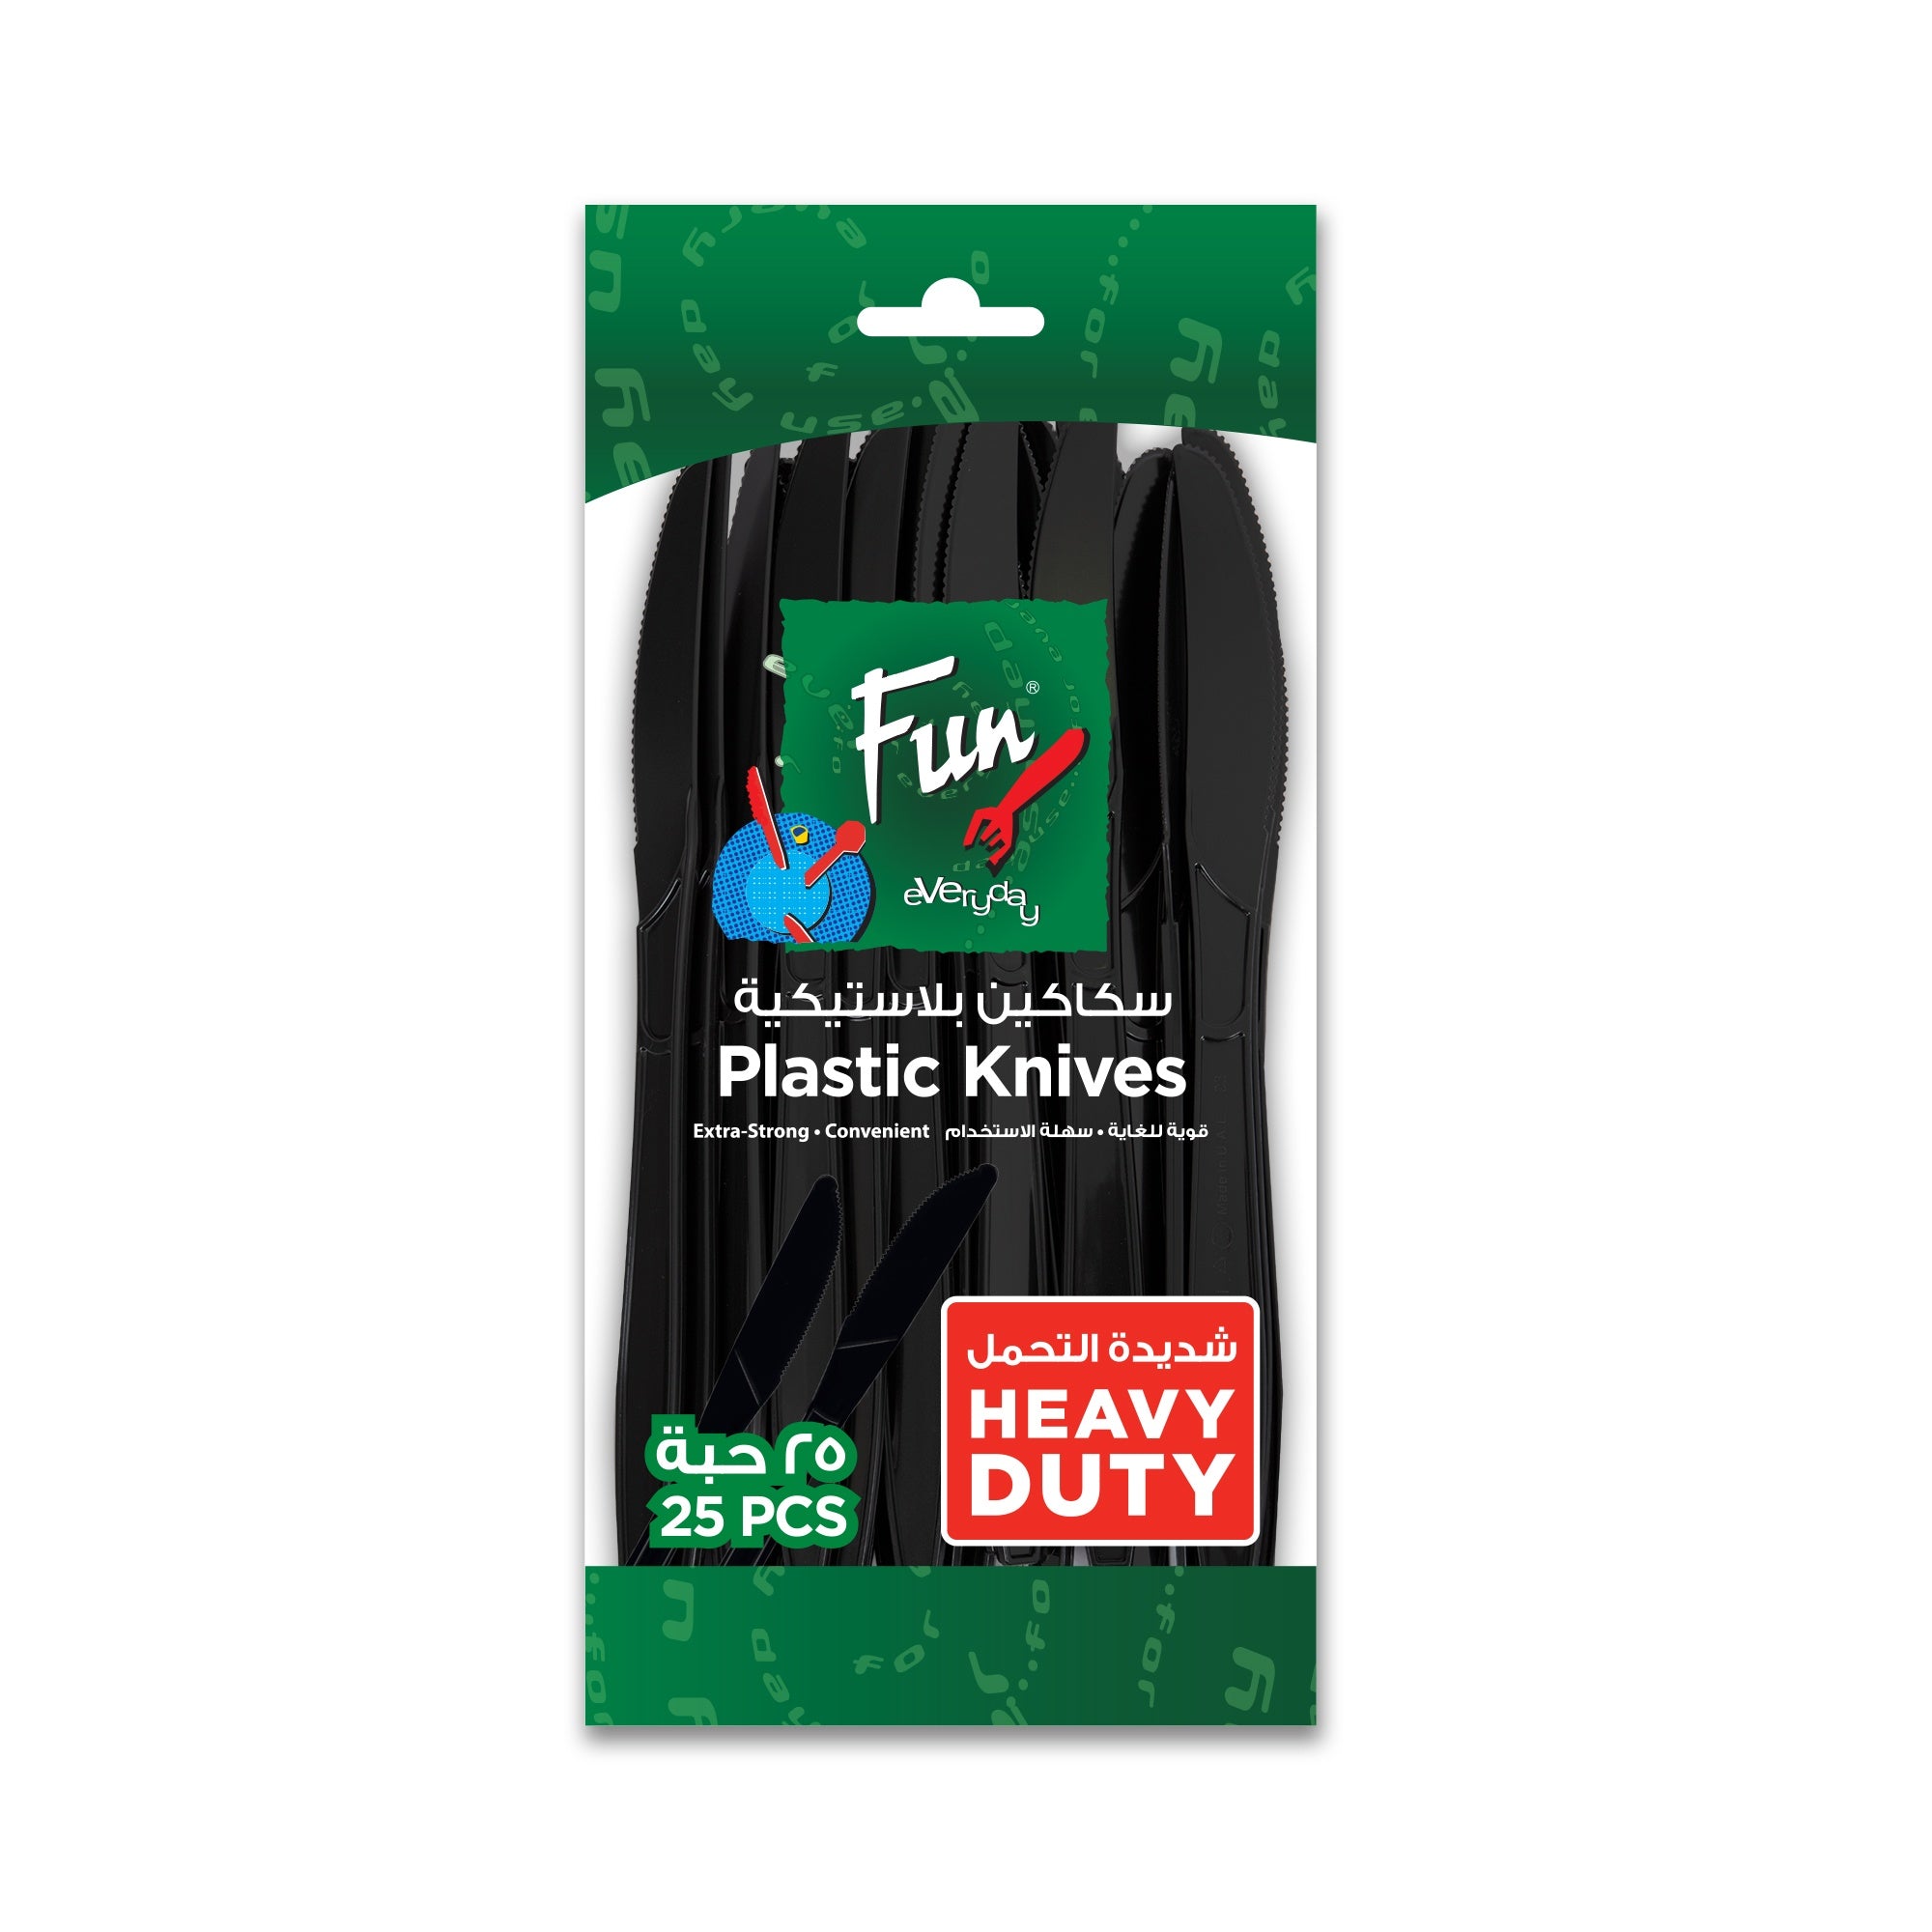 Fun® Heavy Duty Plastic Knife Black 25 Pcs